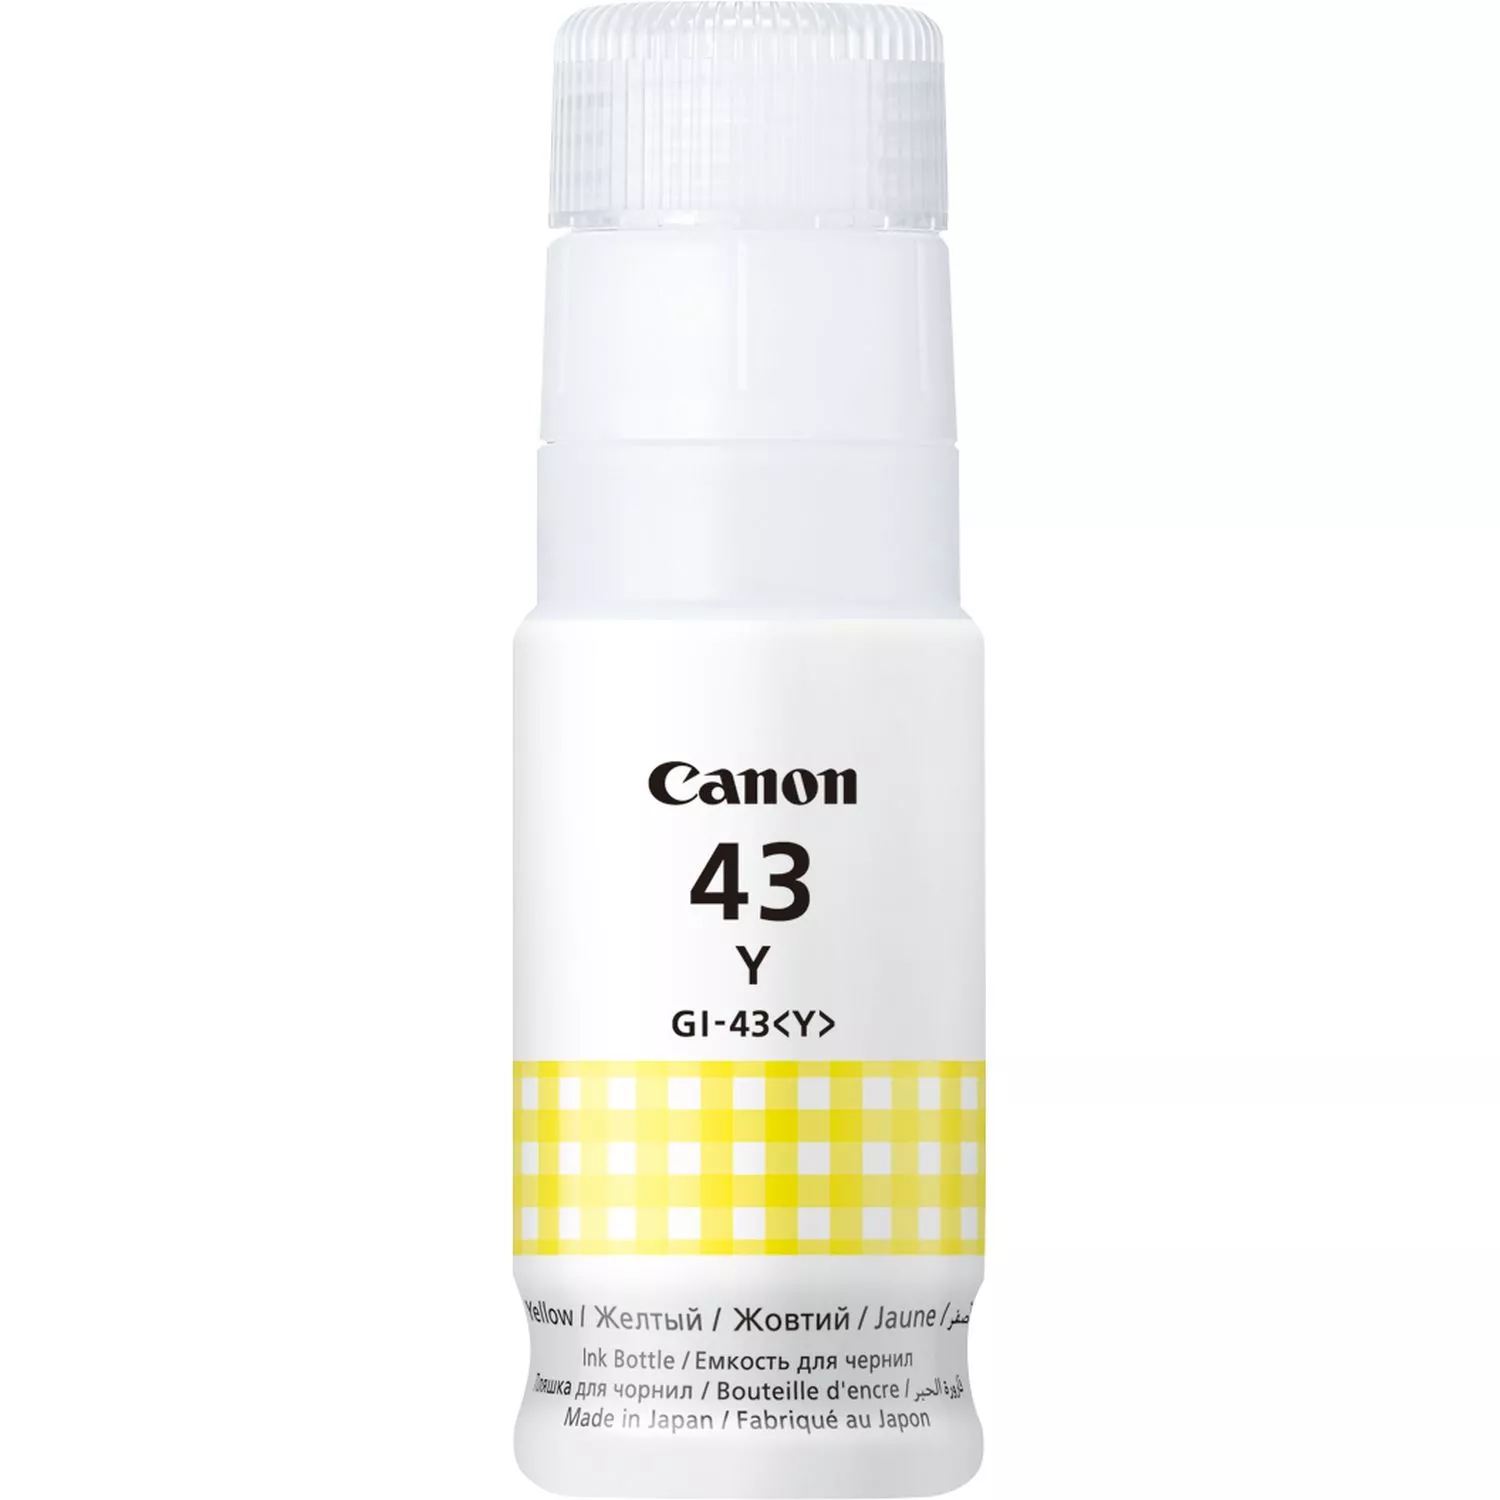 Achat CANON GI-43 Y EMB Yellow Ink Bottle au meilleur prix